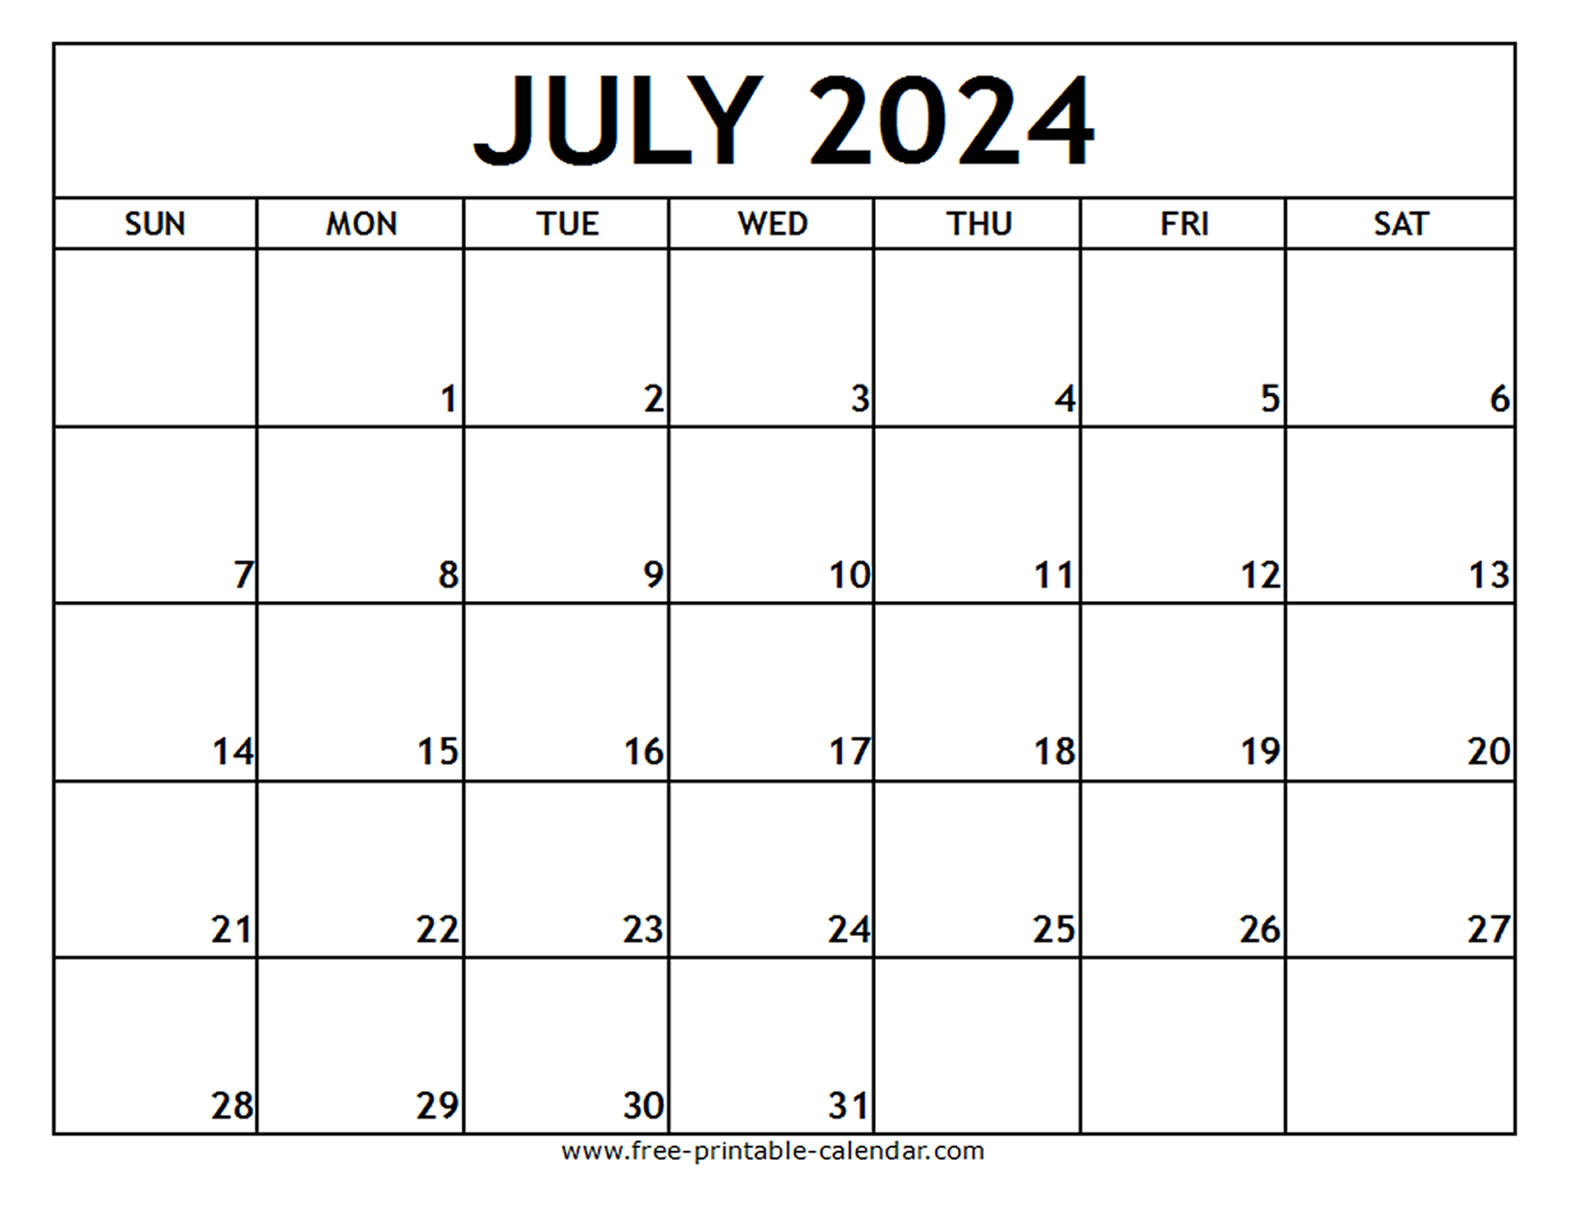 July 2024 Printable Calendar - Free-Printable-Calendar within Free Printable Weekly Calendar July 2024